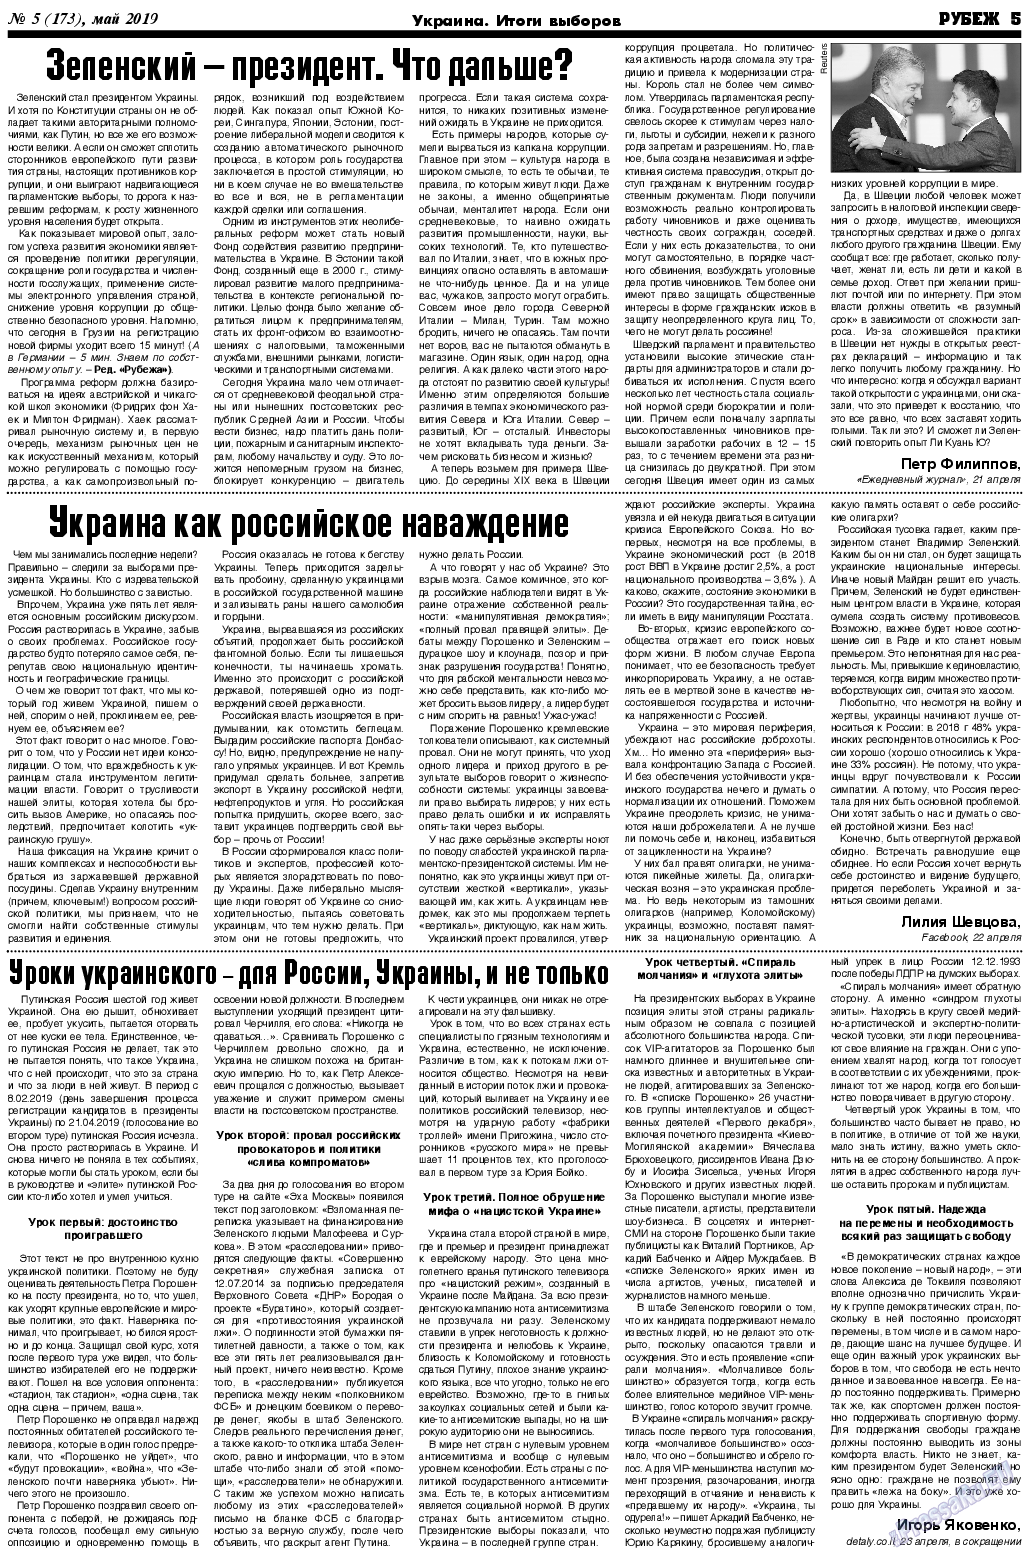 Рубеж, газета. 2019 №5 стр.5